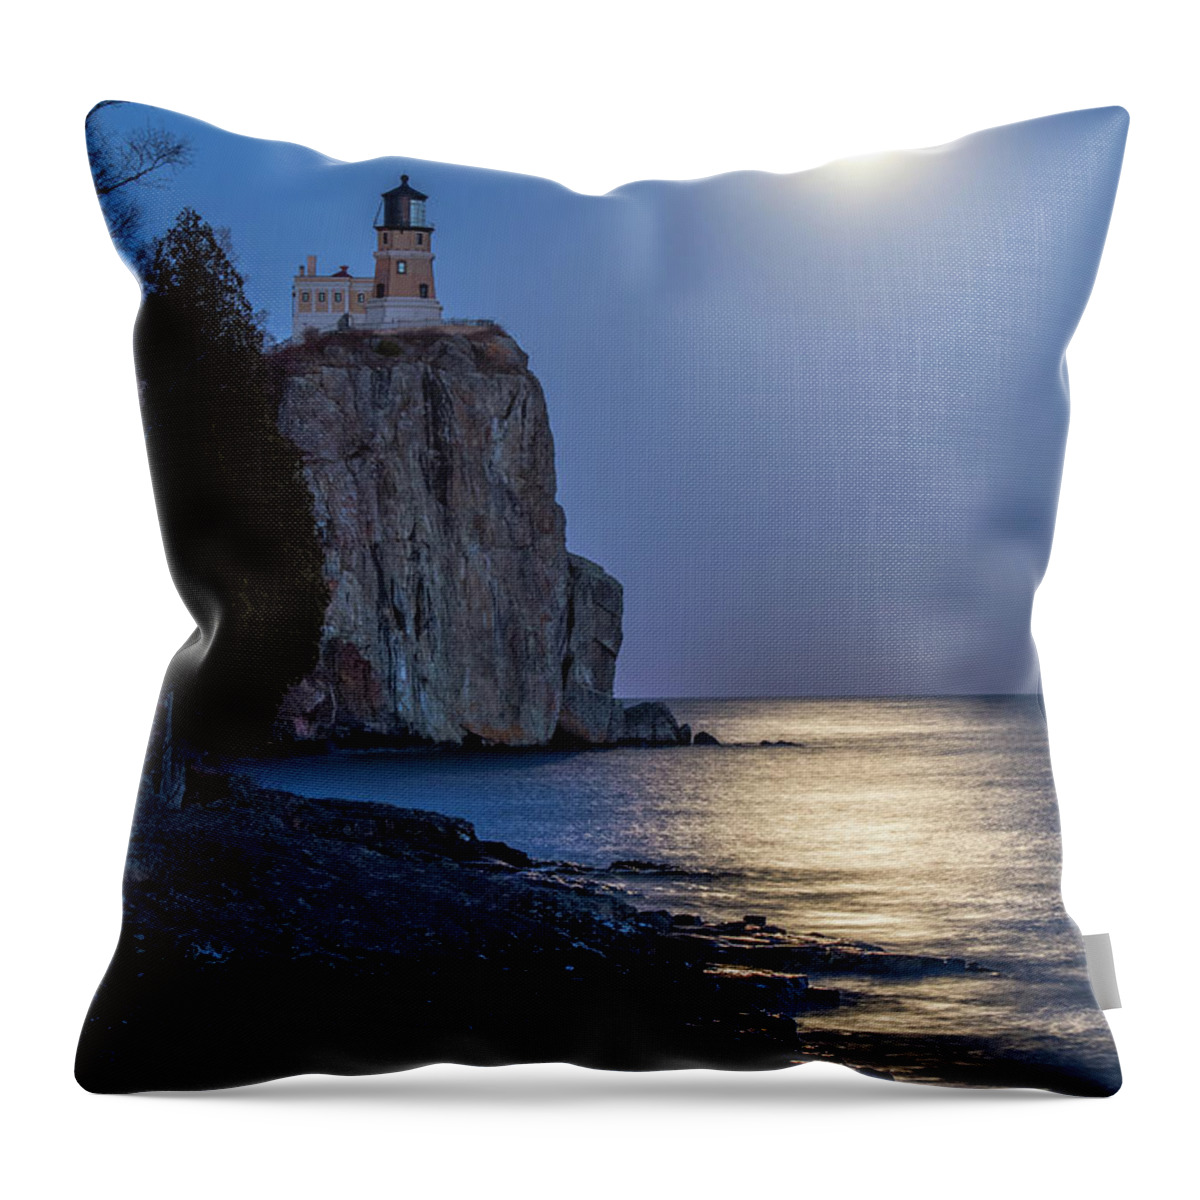 Split Rock Lighthouse Throw Pillow featuring the photograph Moon Light On Split Rock by Paul Freidlund